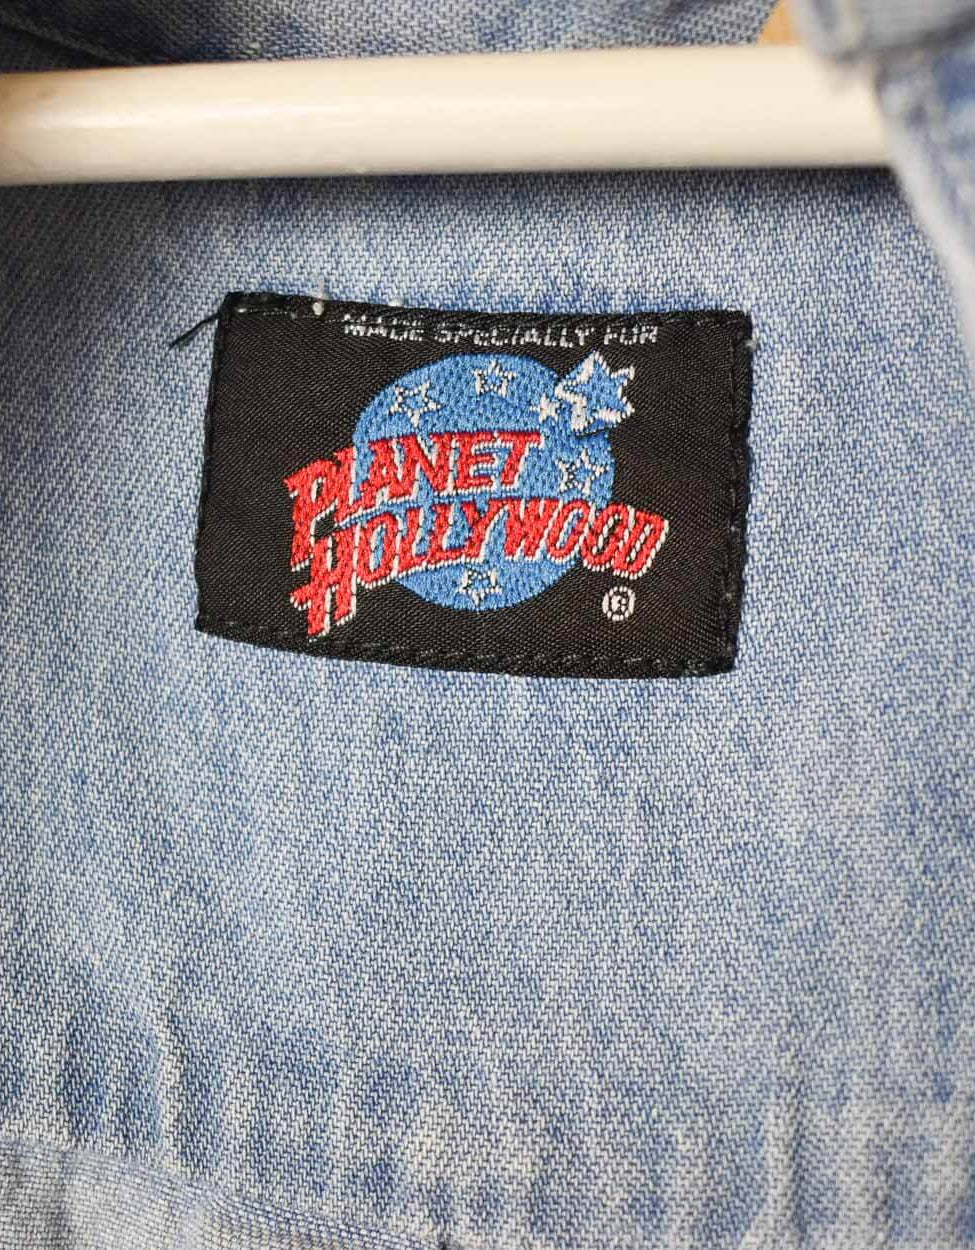 Baby Planet Hollywood Dallas Denim Shirt - X-Large